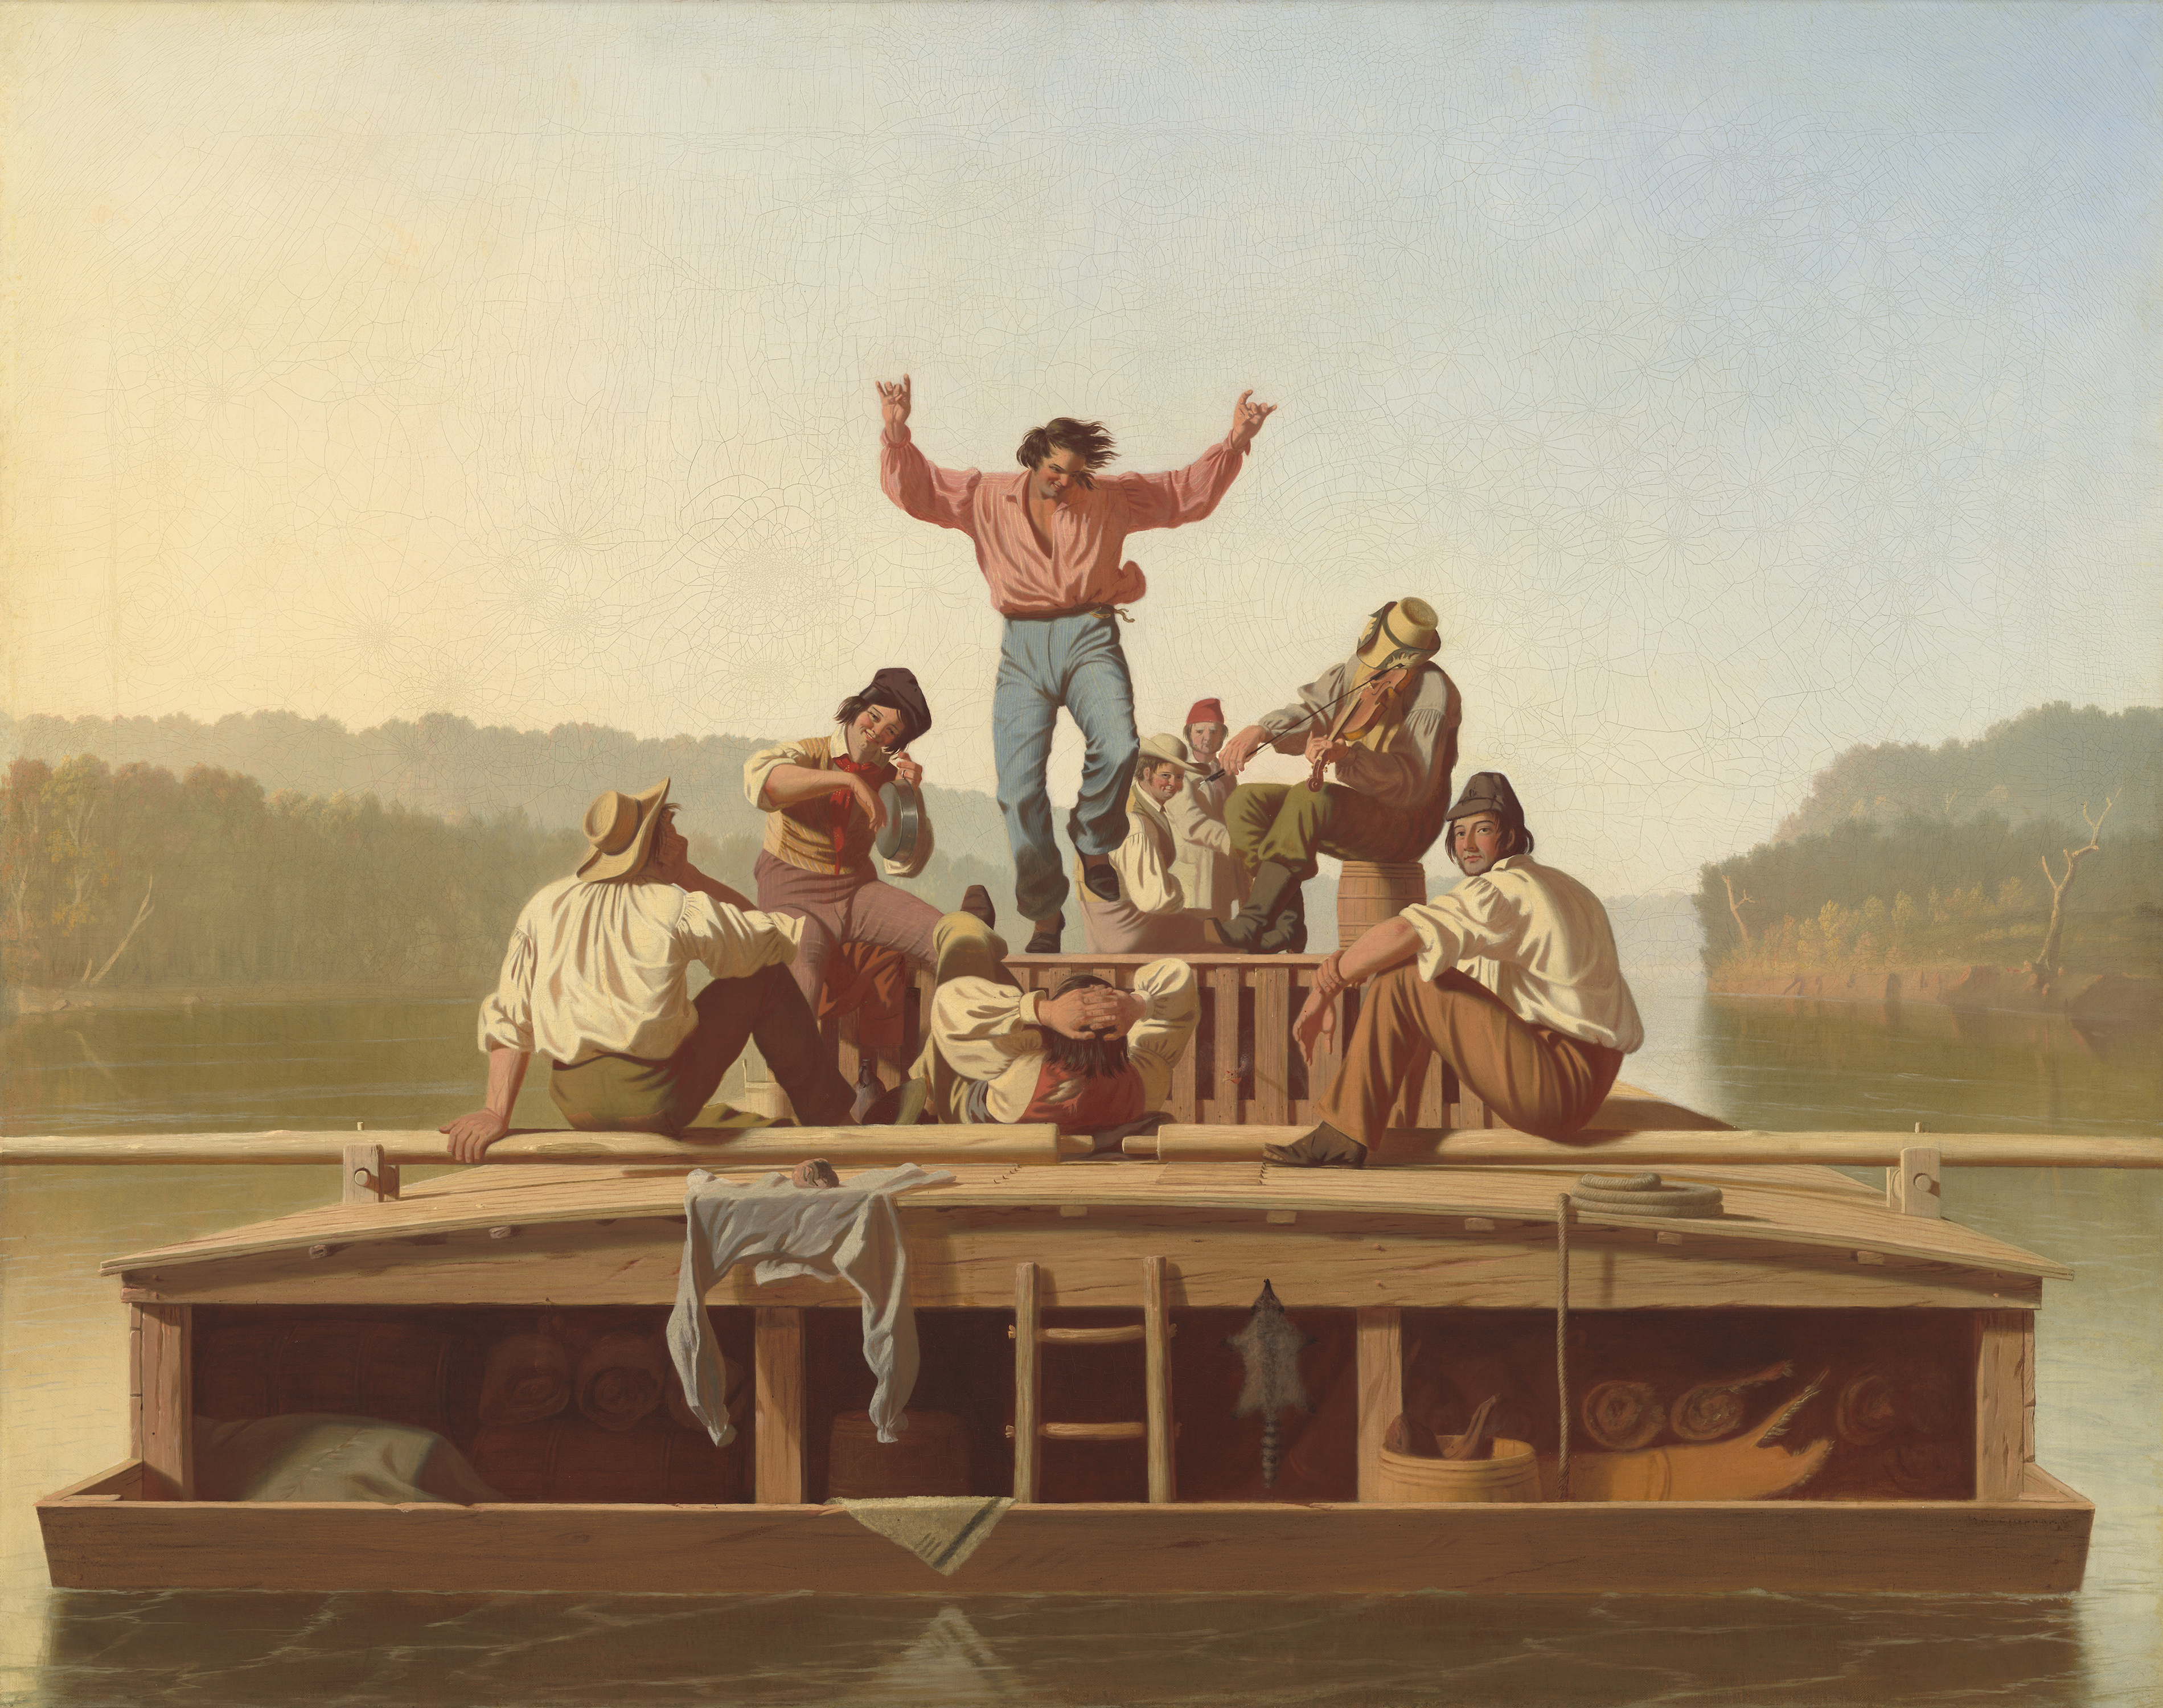 The Jolly Flatboatmen by George Caleb Bingham - 1846 National Gallery of Art